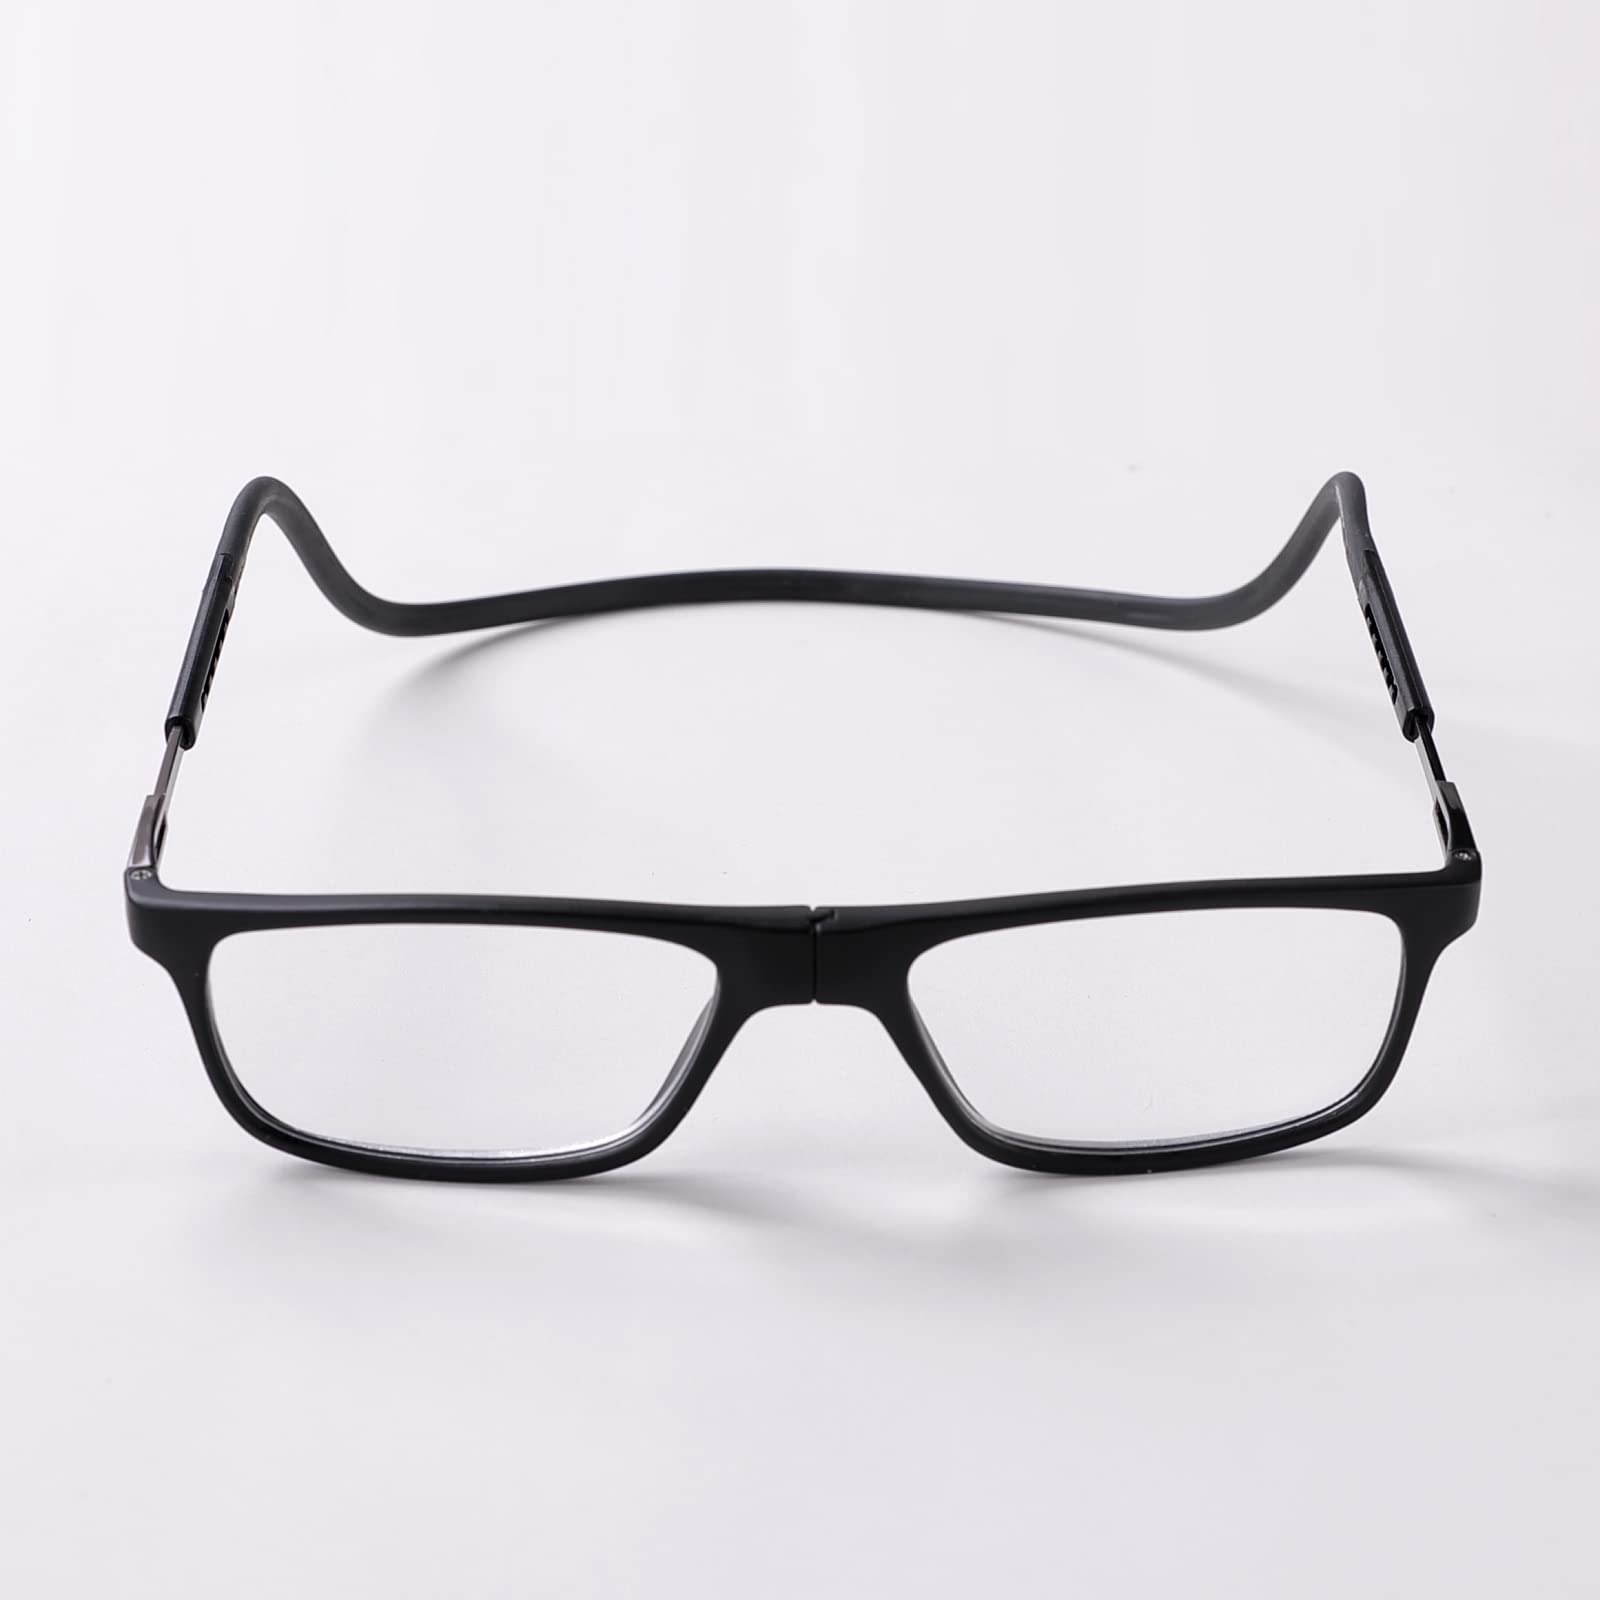 Intellilens Magnetic Reading Glasses For Men & Women For Near Vision | UV Protected | Foldable | Anti Reflection | Lightweight & Portable | Power (+1.50) | Black